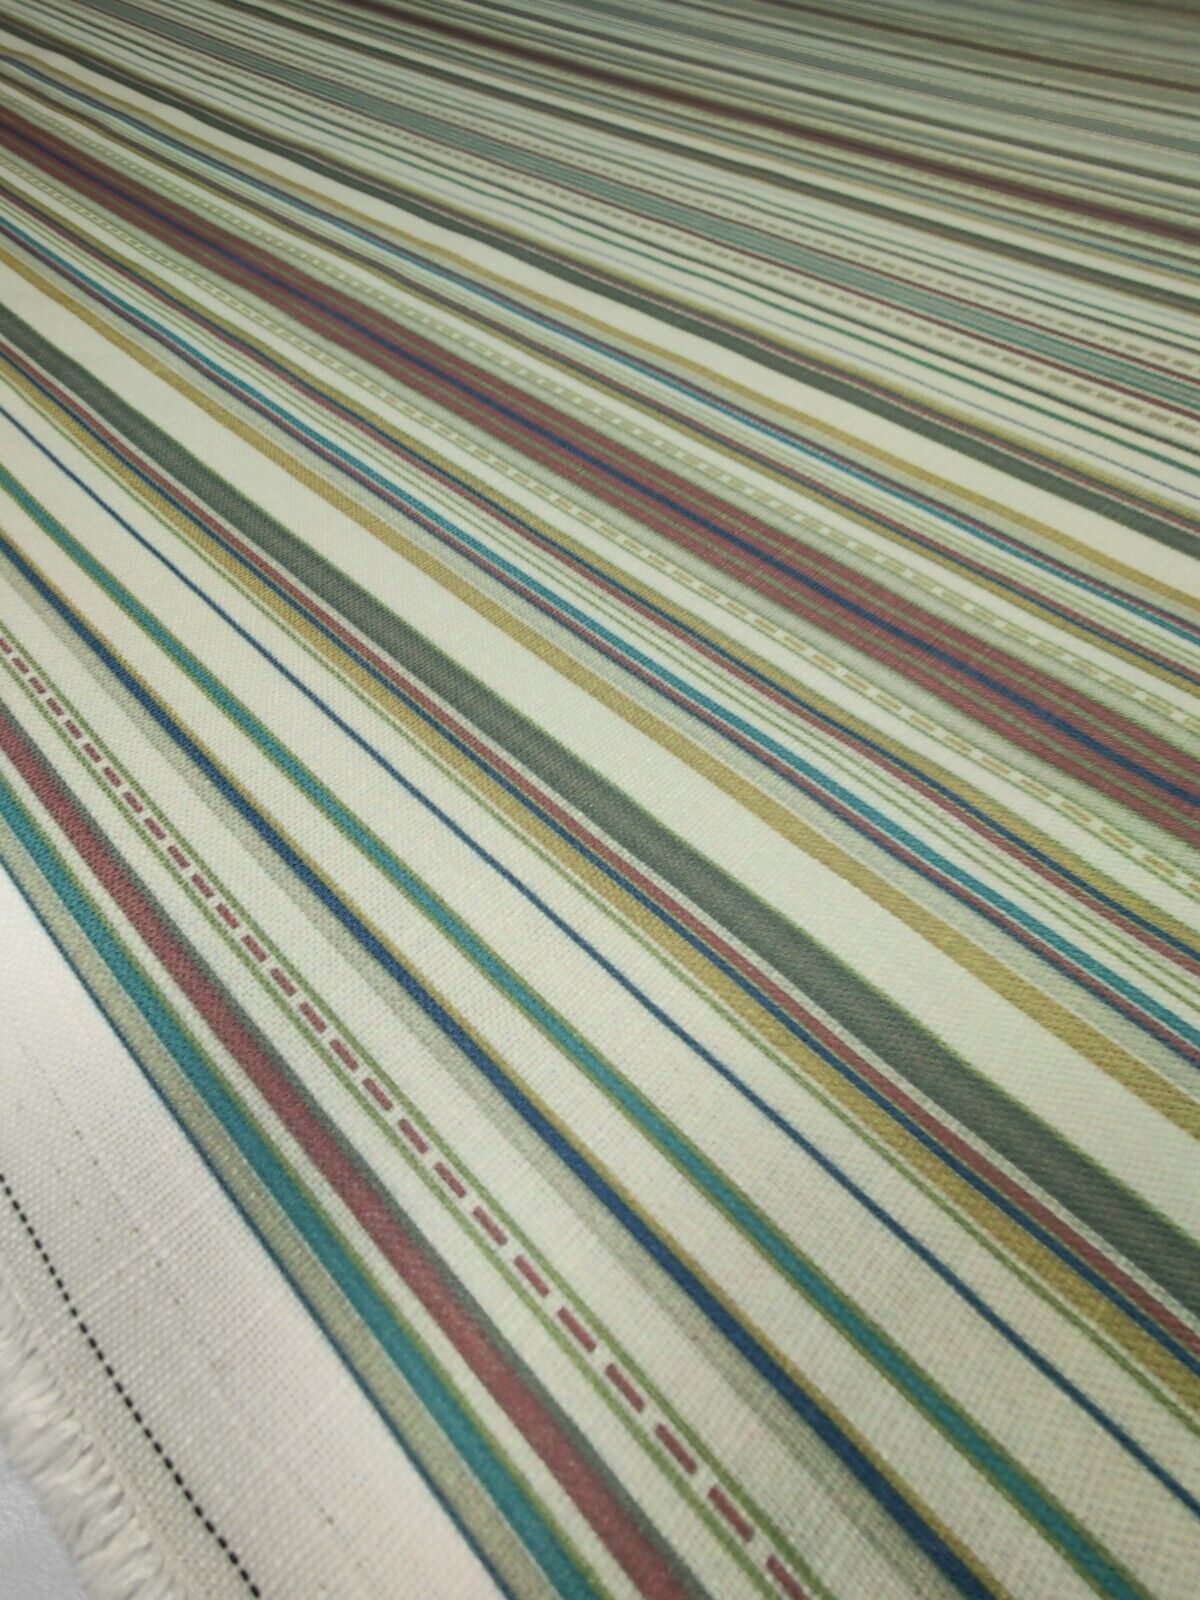 Art Of The Loom Gisburn Stripe 5 Curtain Upholstery Fabric 1.2 Metres